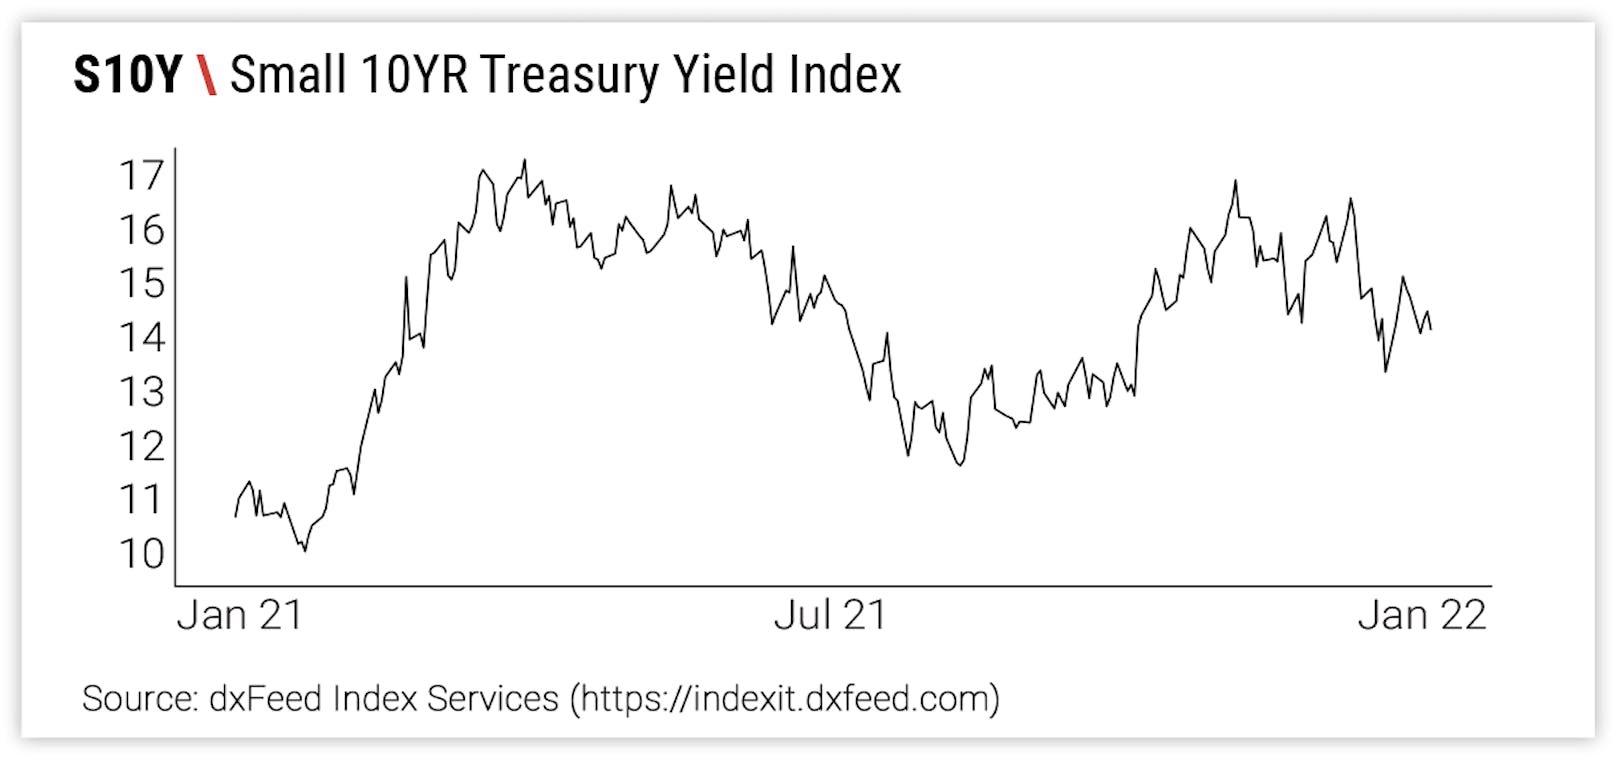 S10Y \ Small 10YR Treasury Yield Index